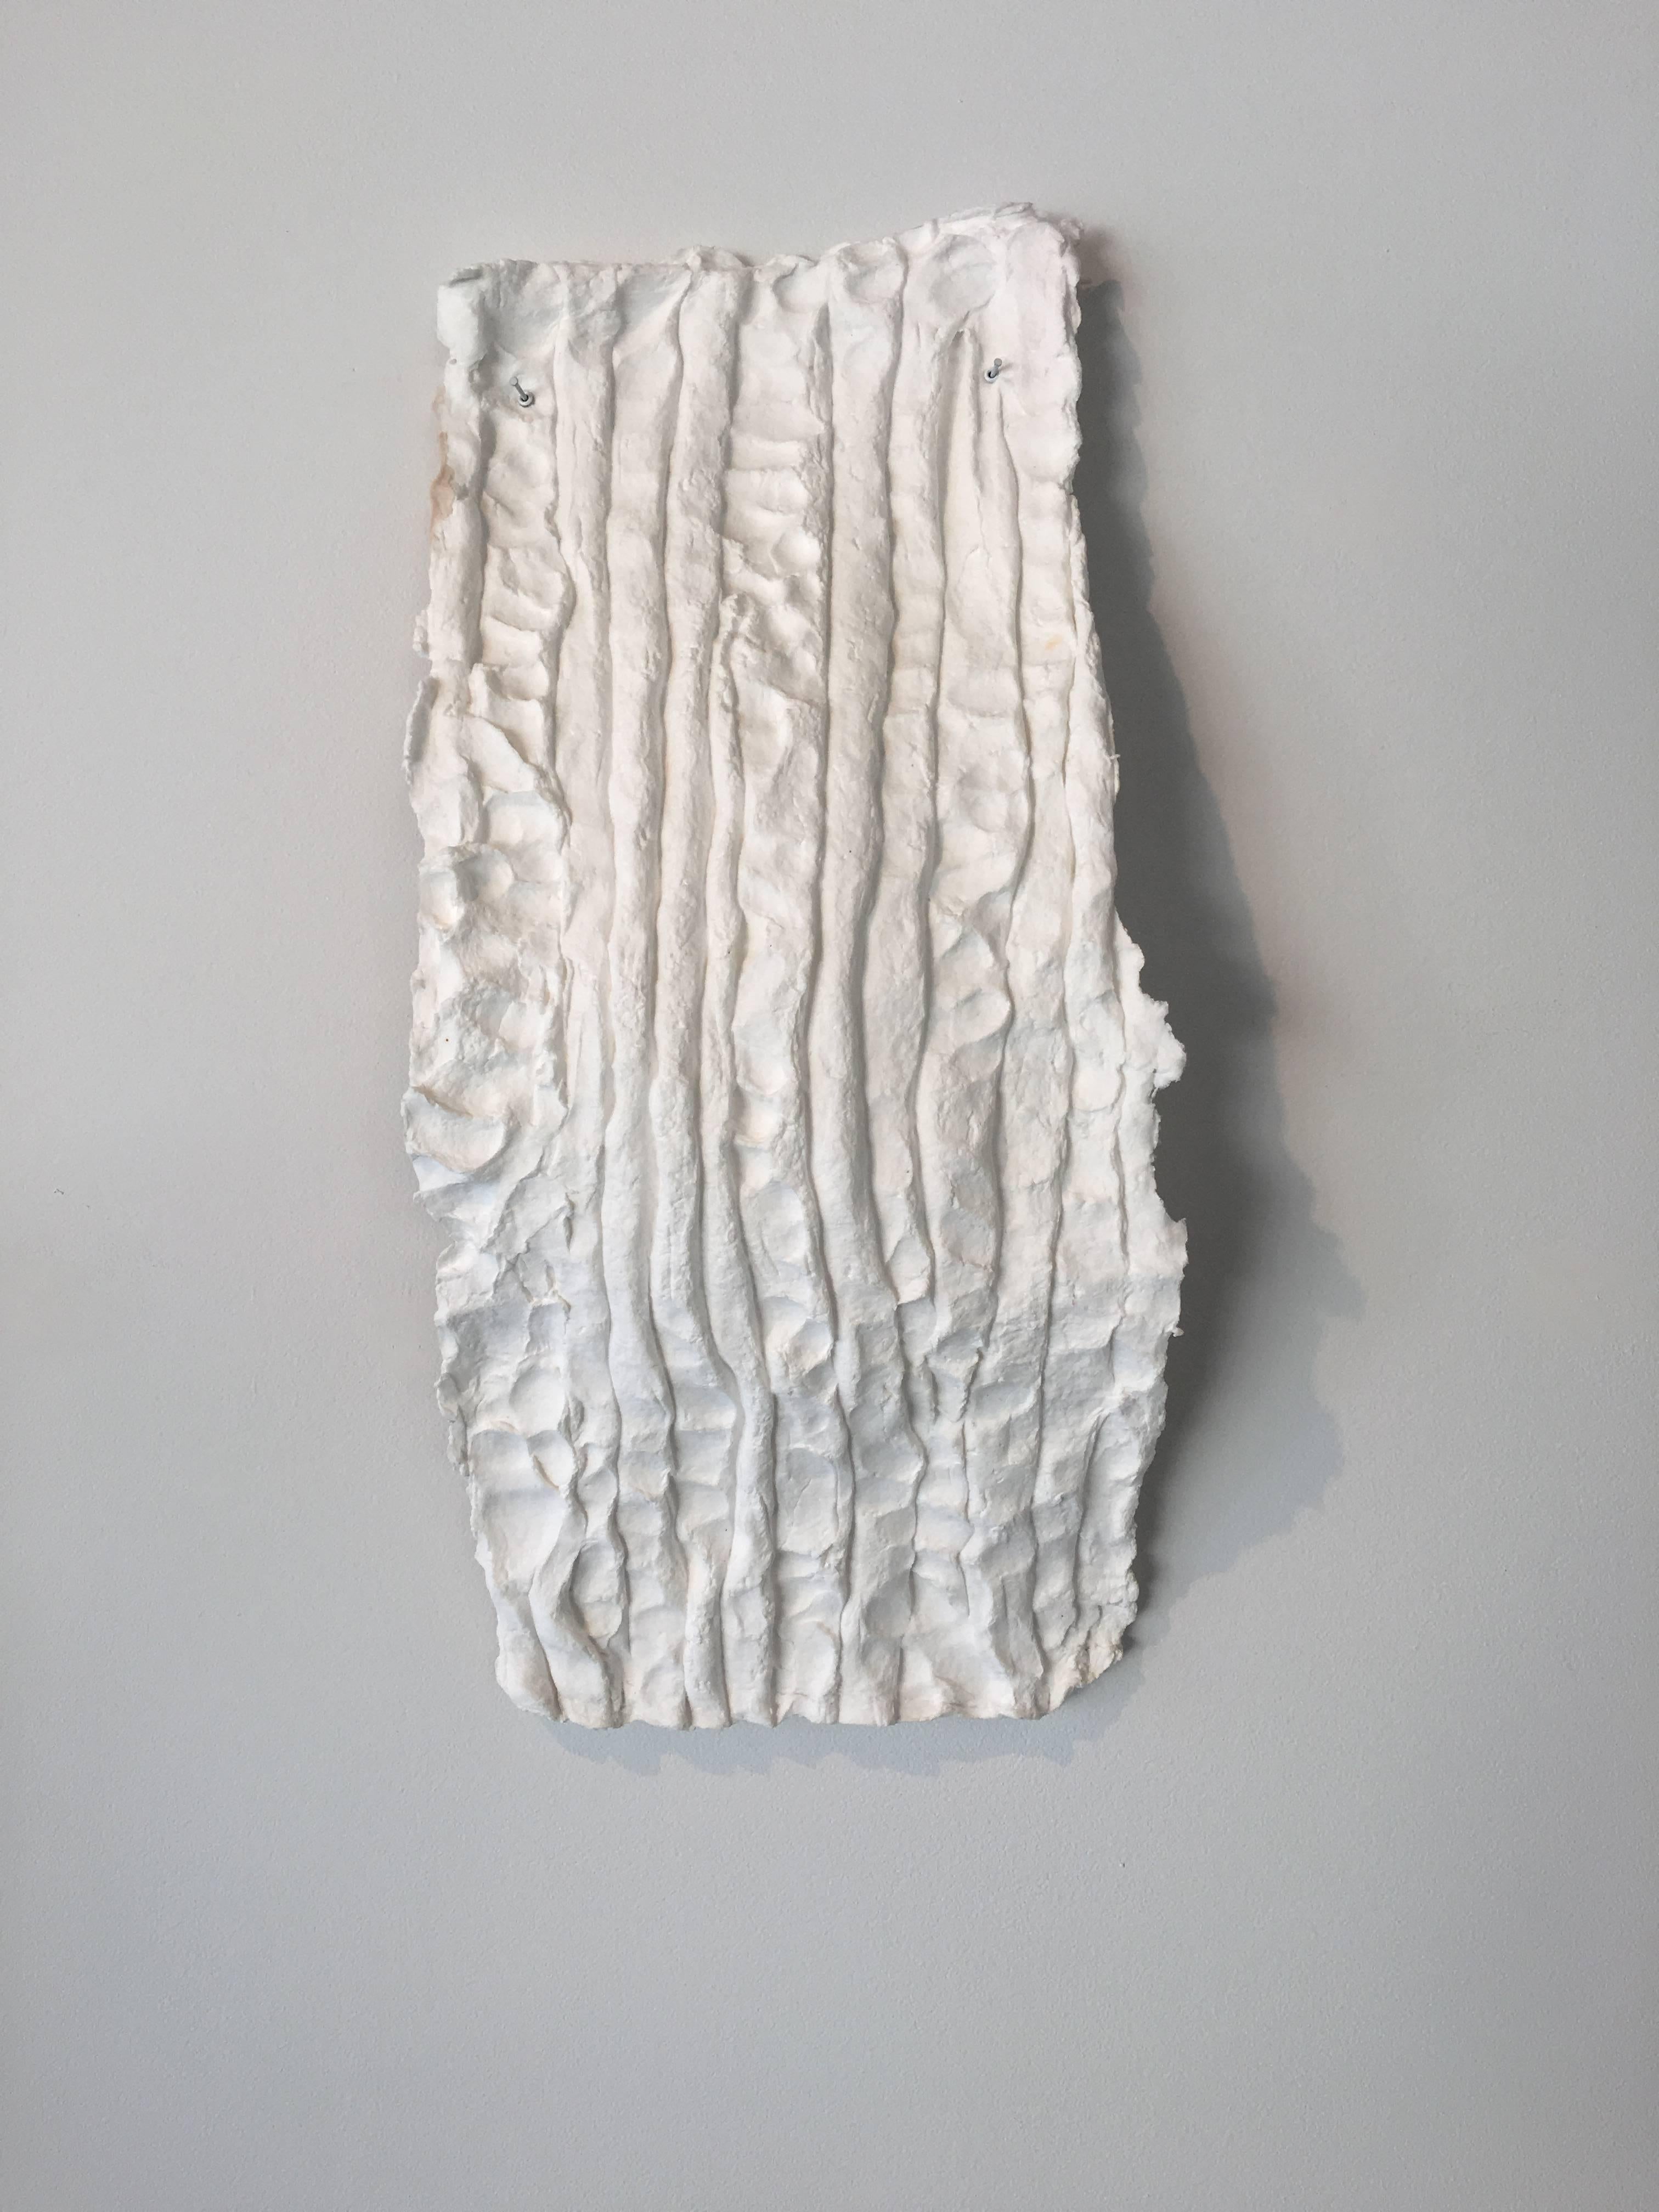 Sylvia Schwartz, 'Brush Stroke, sculptural element in Red Plane', 2016, Resin 